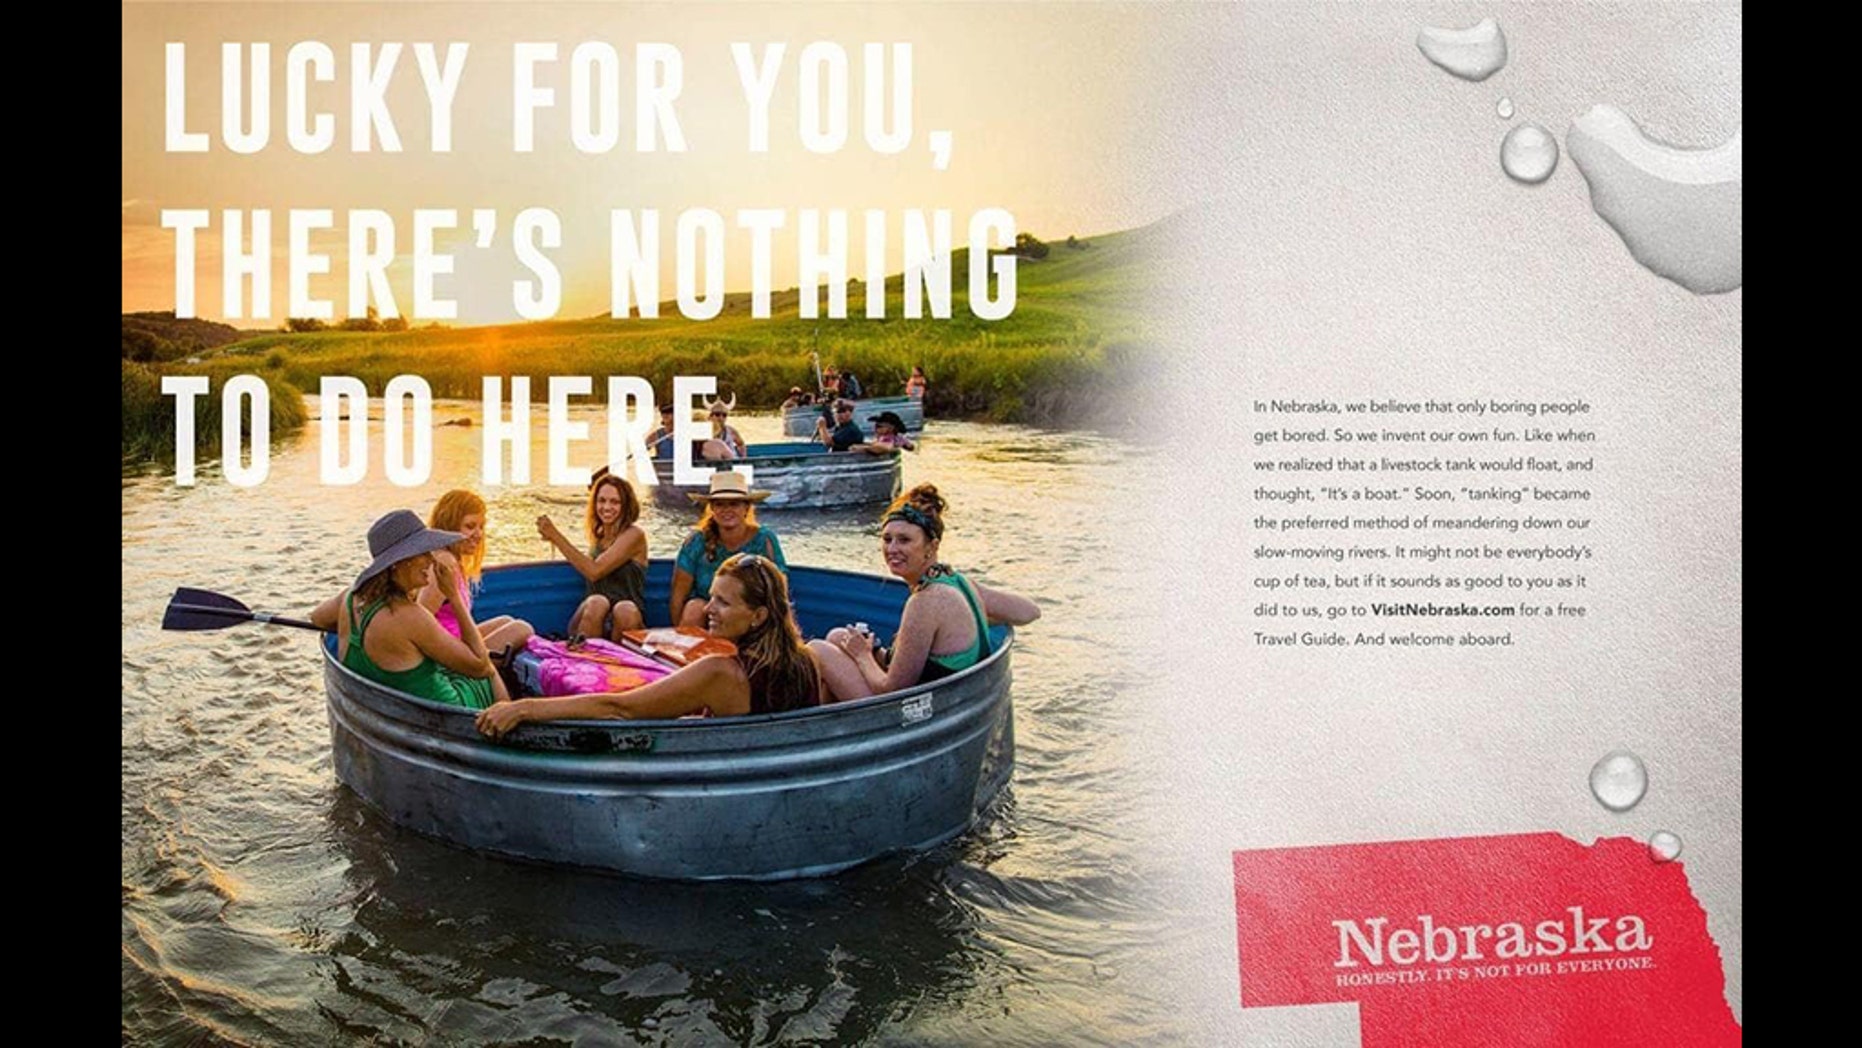 The old slogan and the boasting campaign "Nebraska Nice